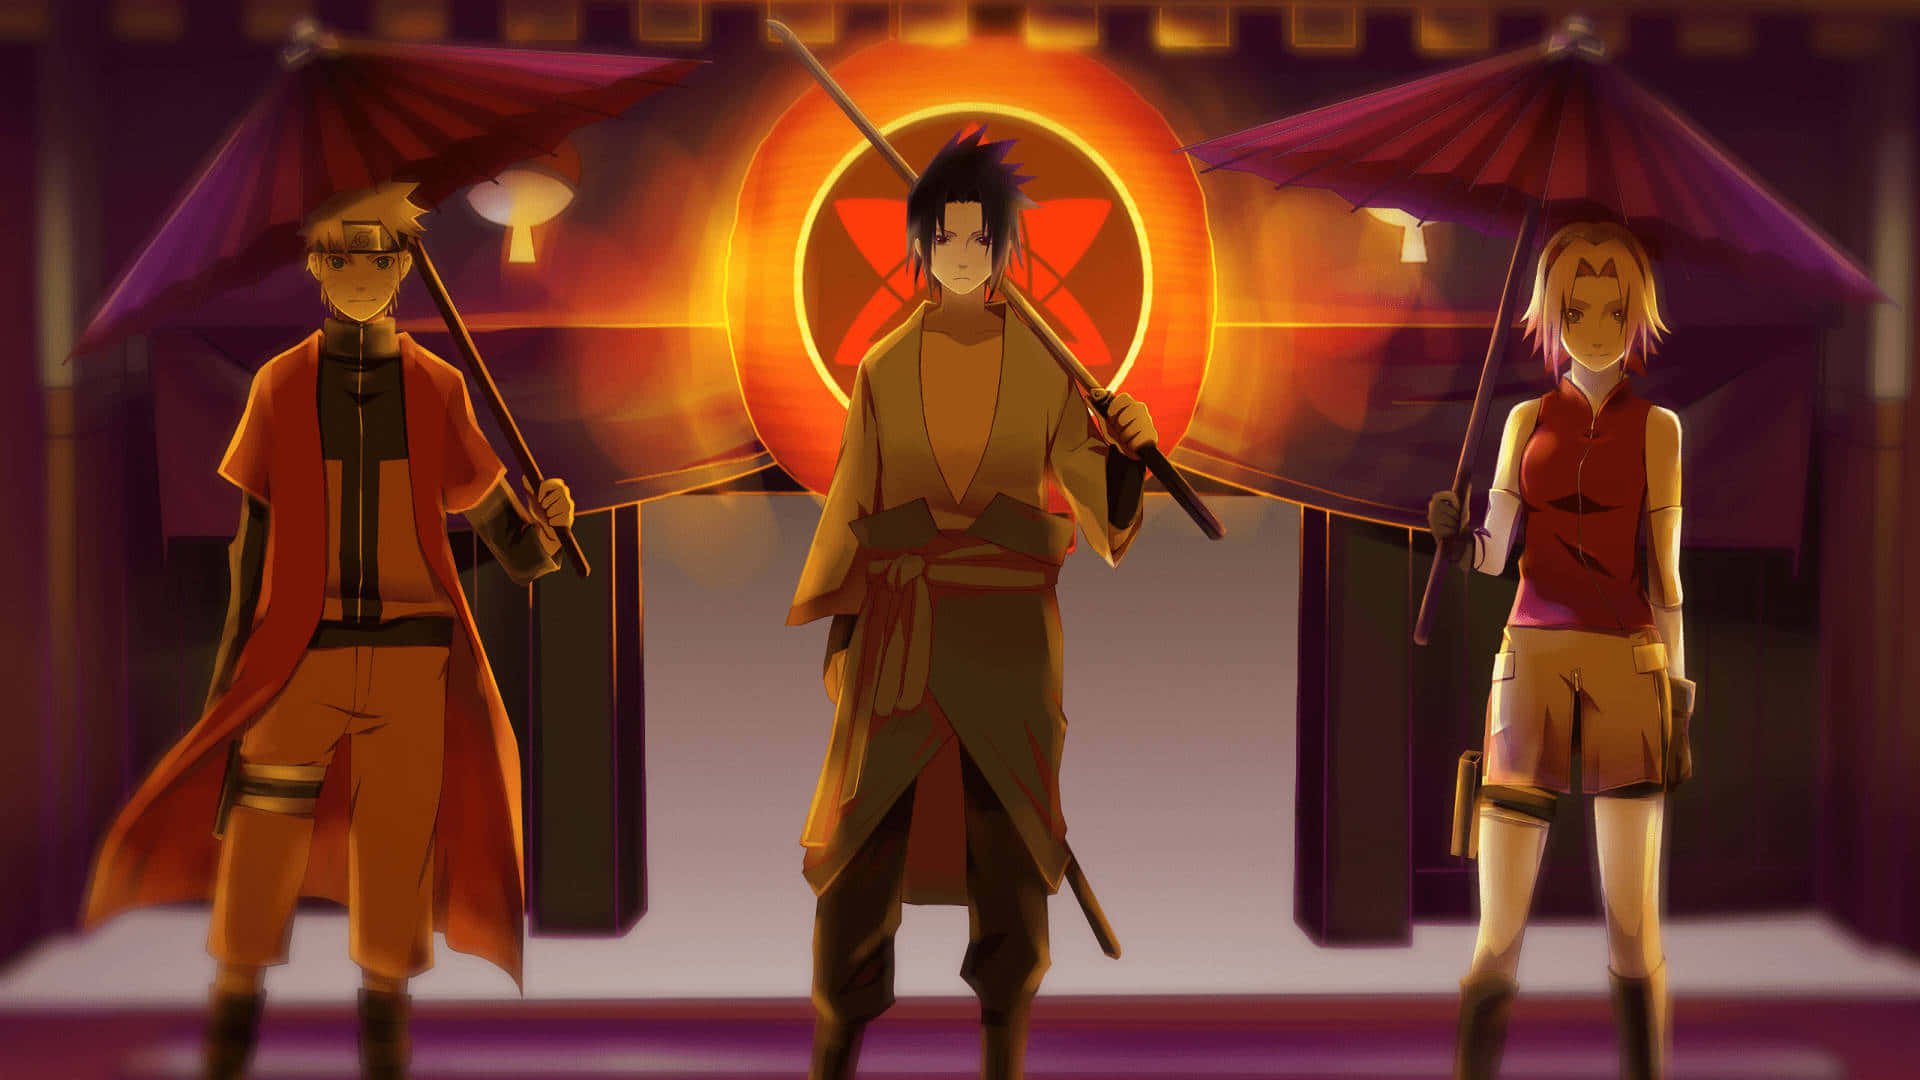 Naruto Team 7 With Umbrellas Wallpaper